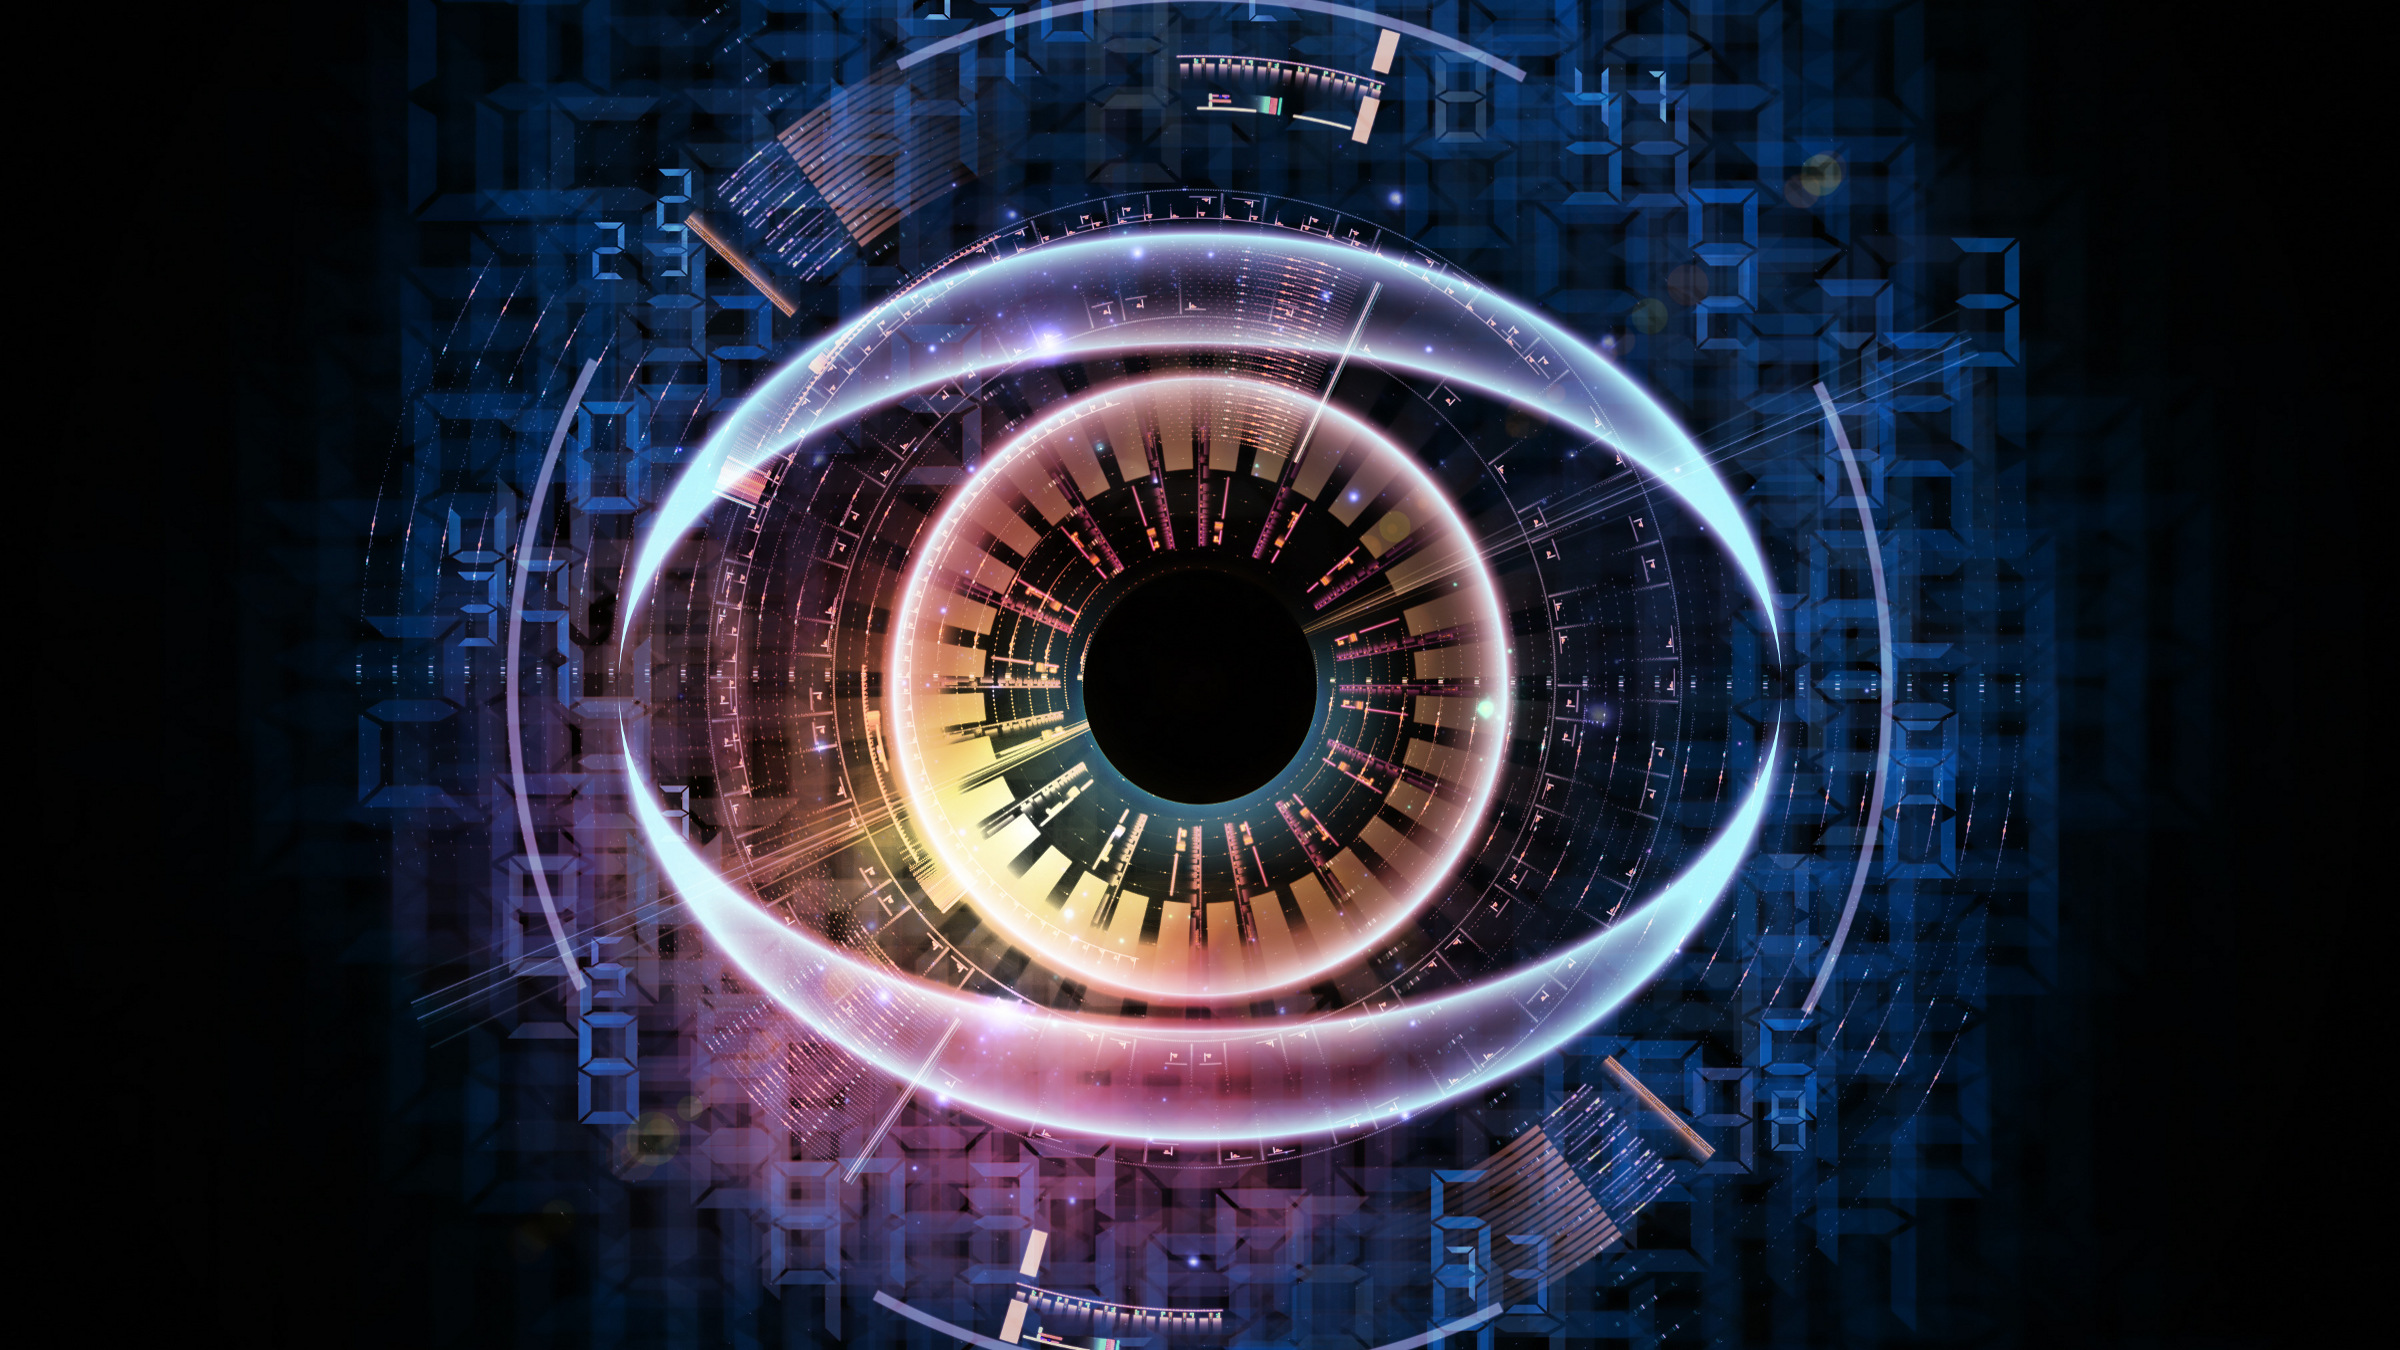 Credit: Getty Images robotic eye suggesting machine vision, illustration